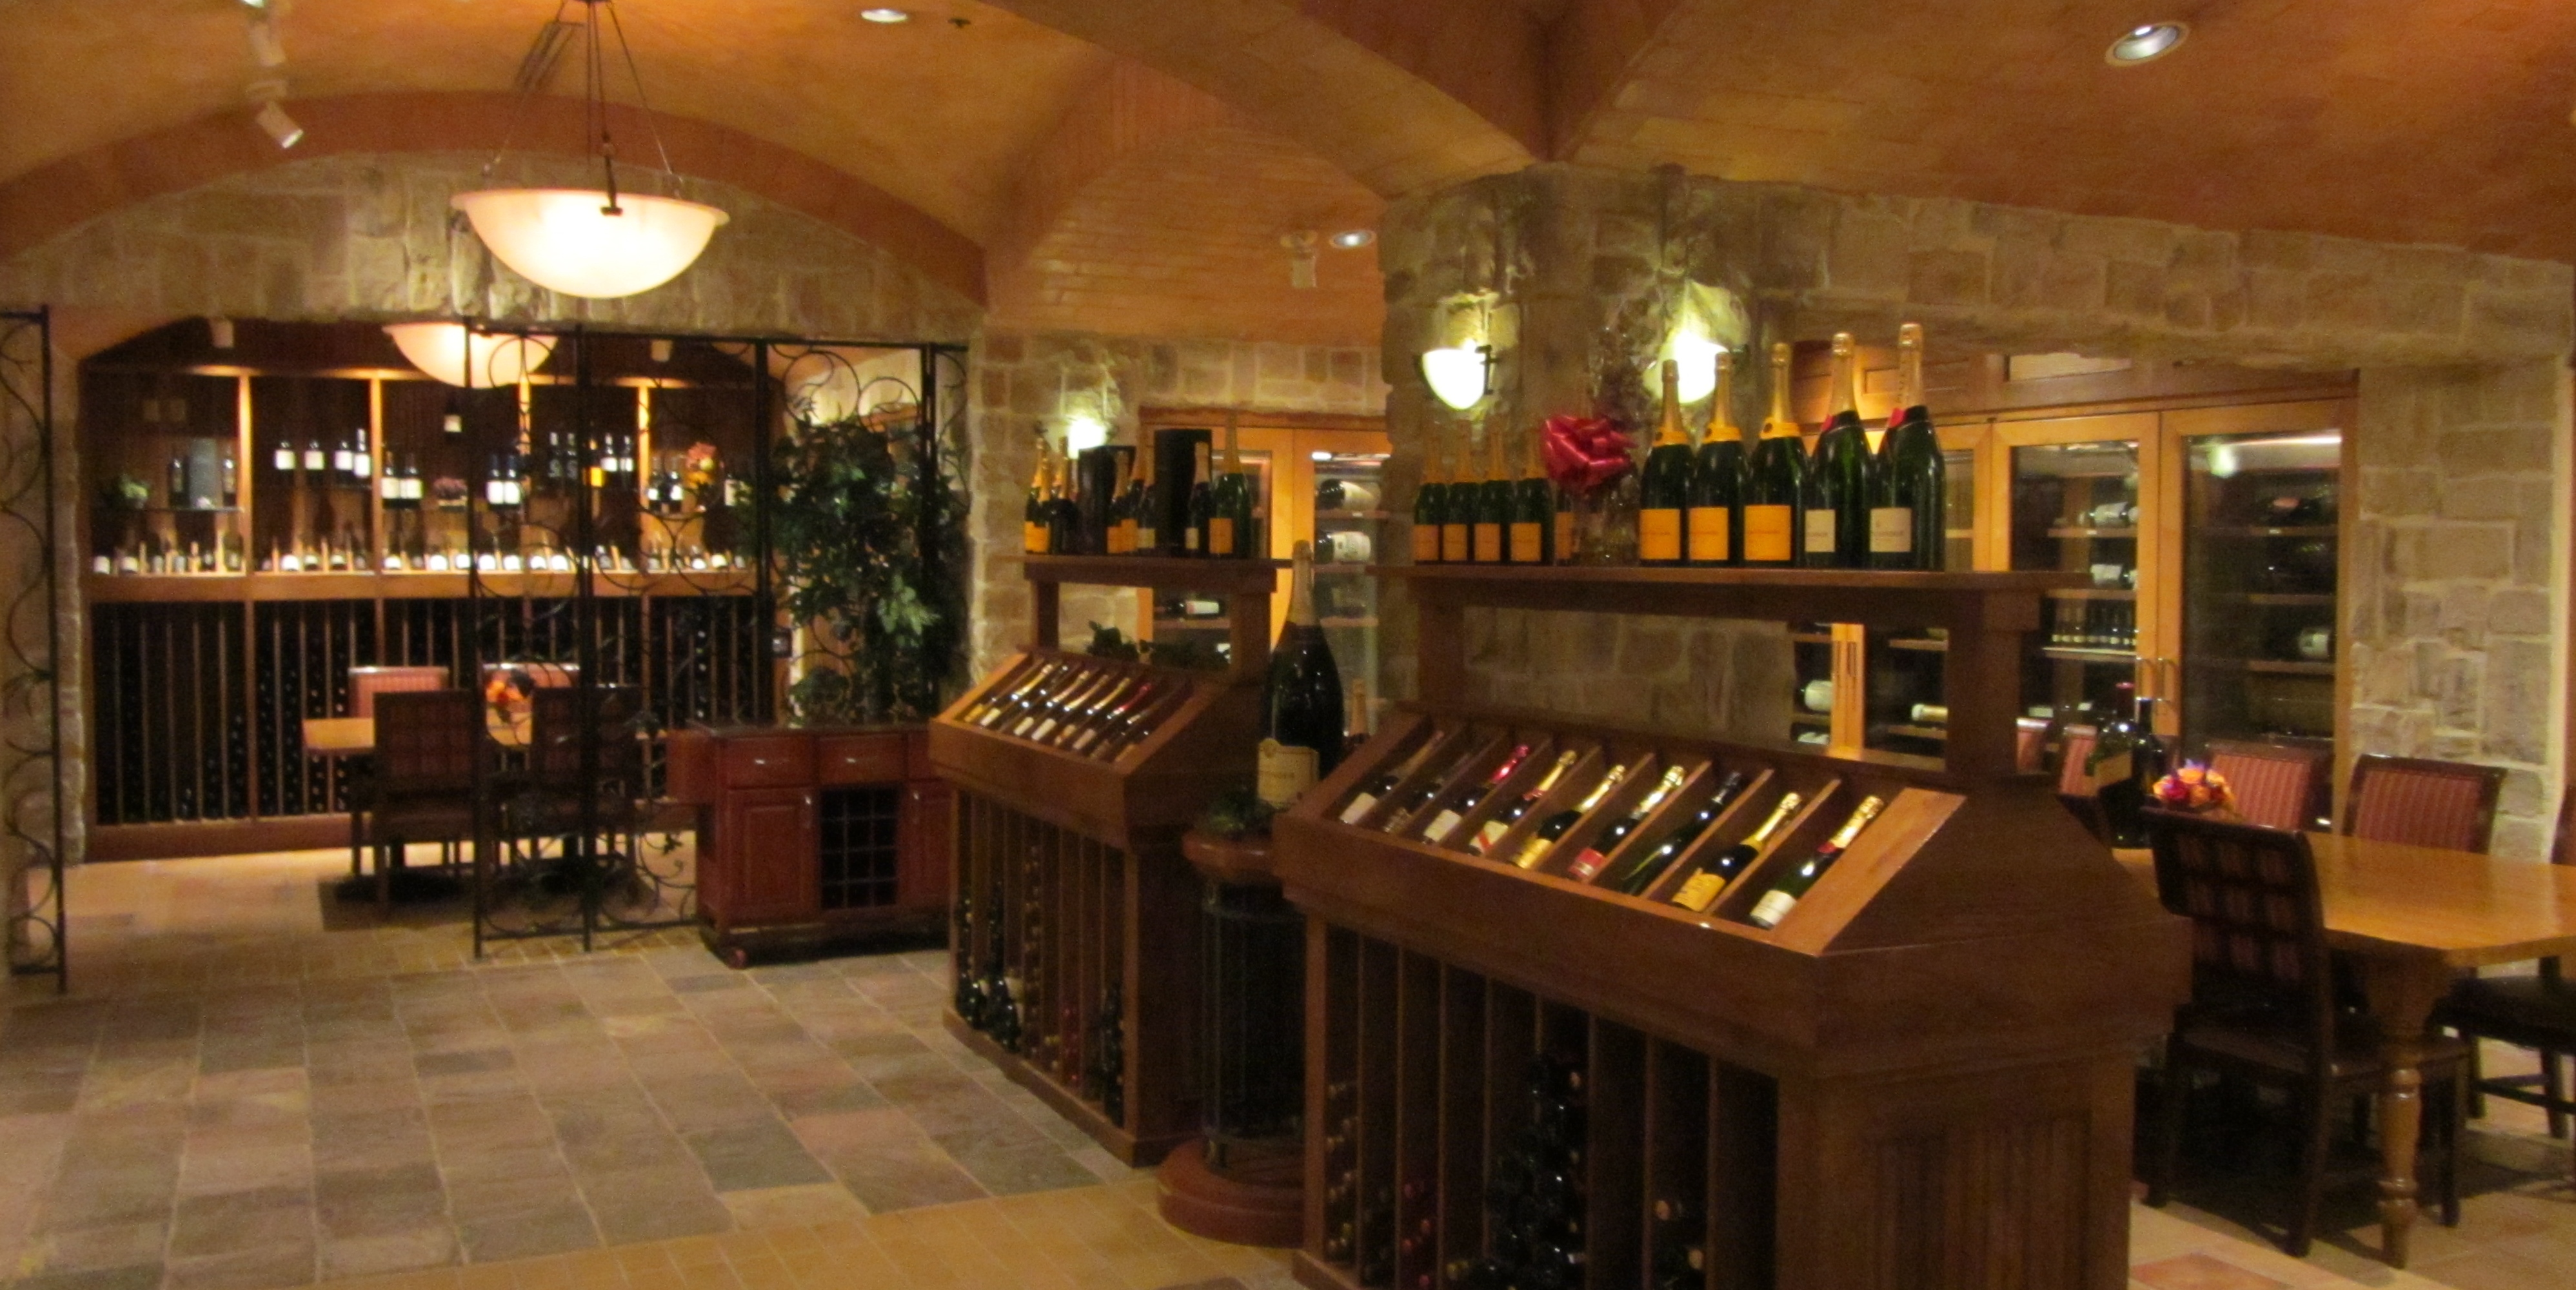 Wine Places: Las Vegas Wine Bars and Shops